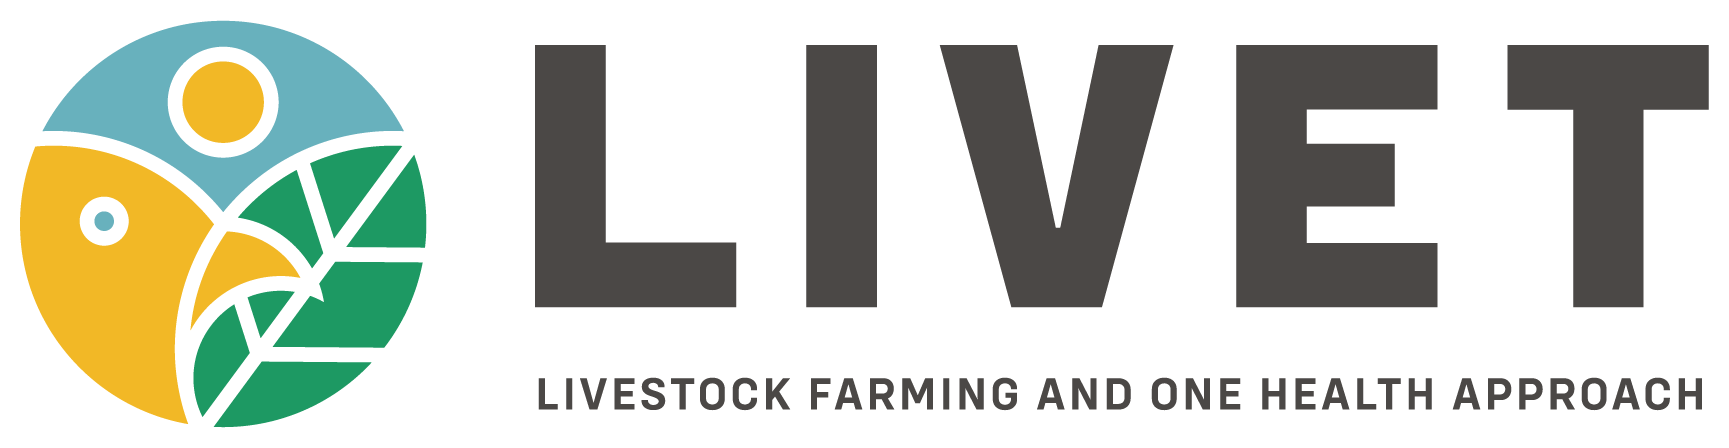 LIVET - livestock farming and one health approach